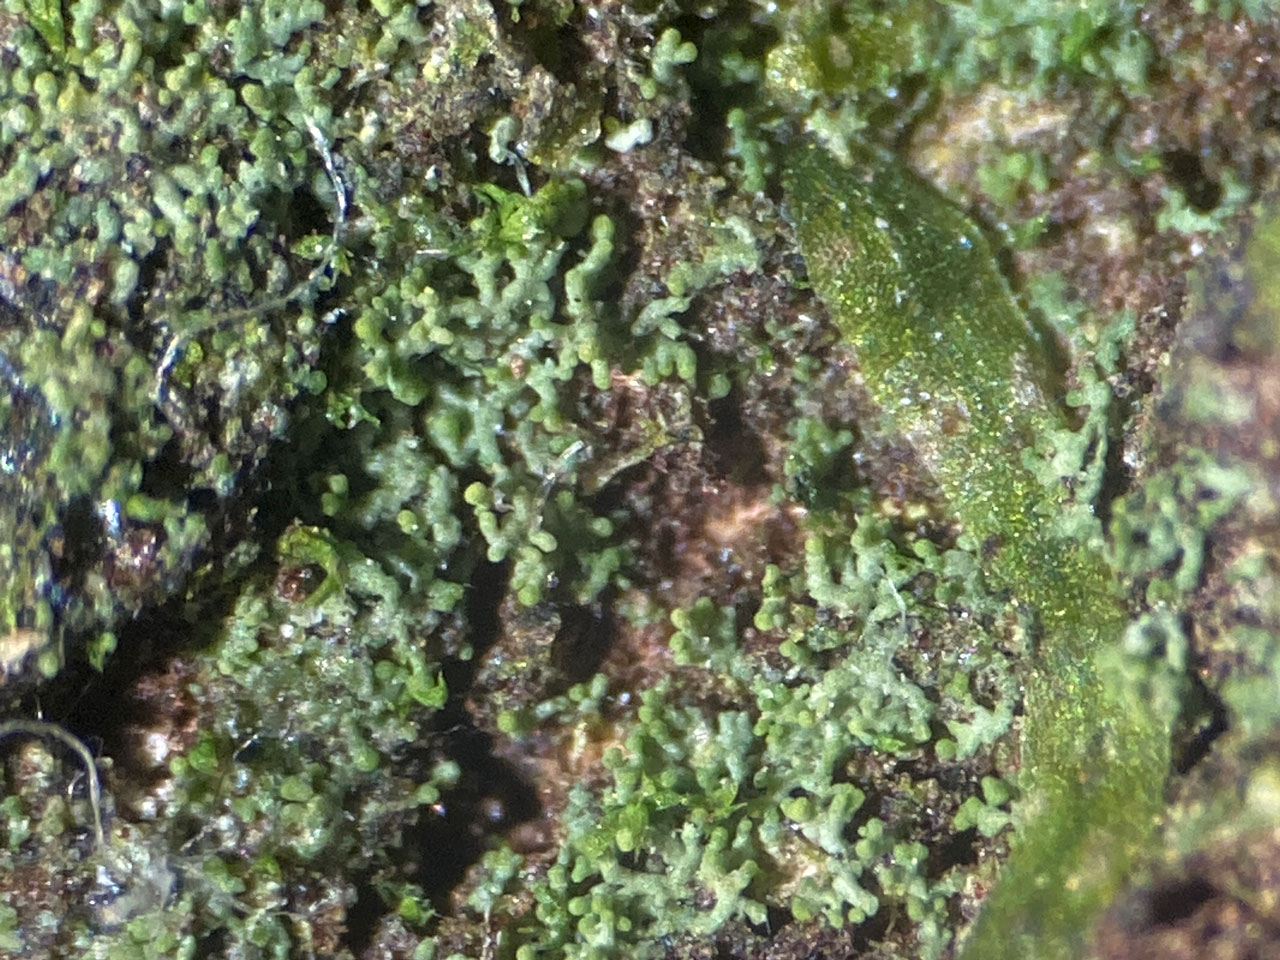 Agonimia octospora, dry, Ashurst Wood, New Forest